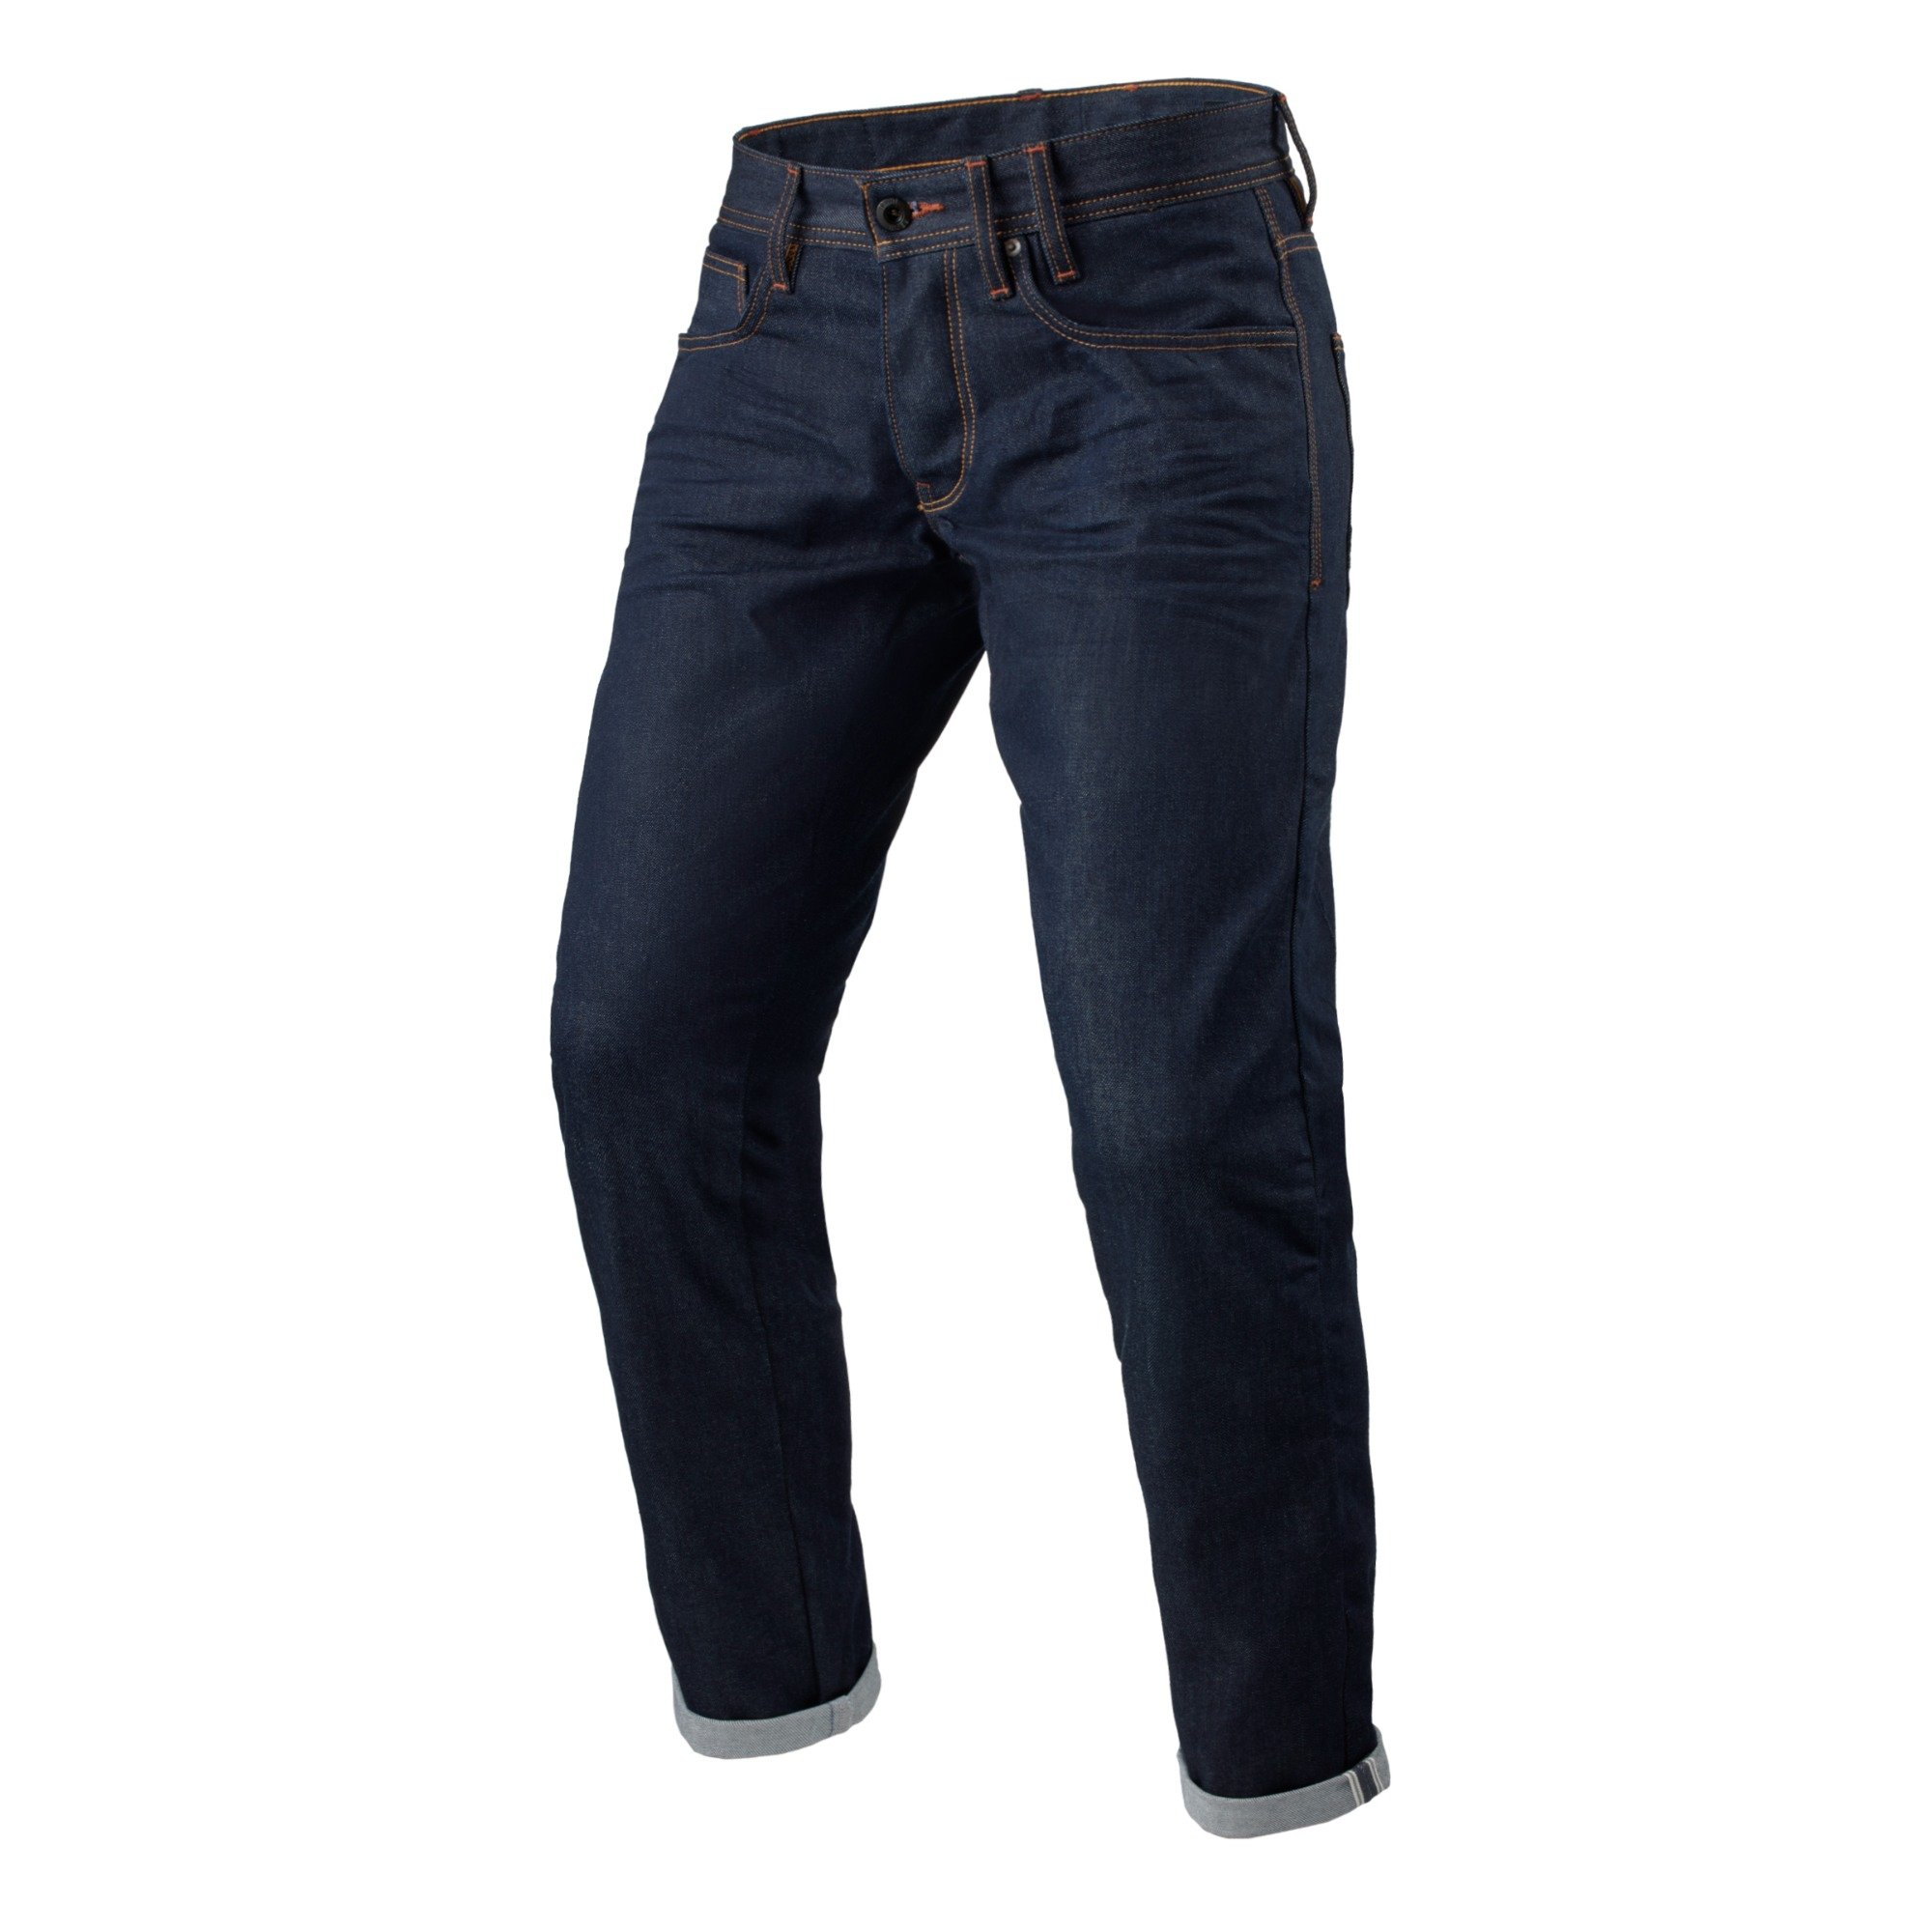 Image of REV'IT! Jeans Lewis Selvedge TF Dark Blue L32 Motorcycle Pants Size L32/W28 EN